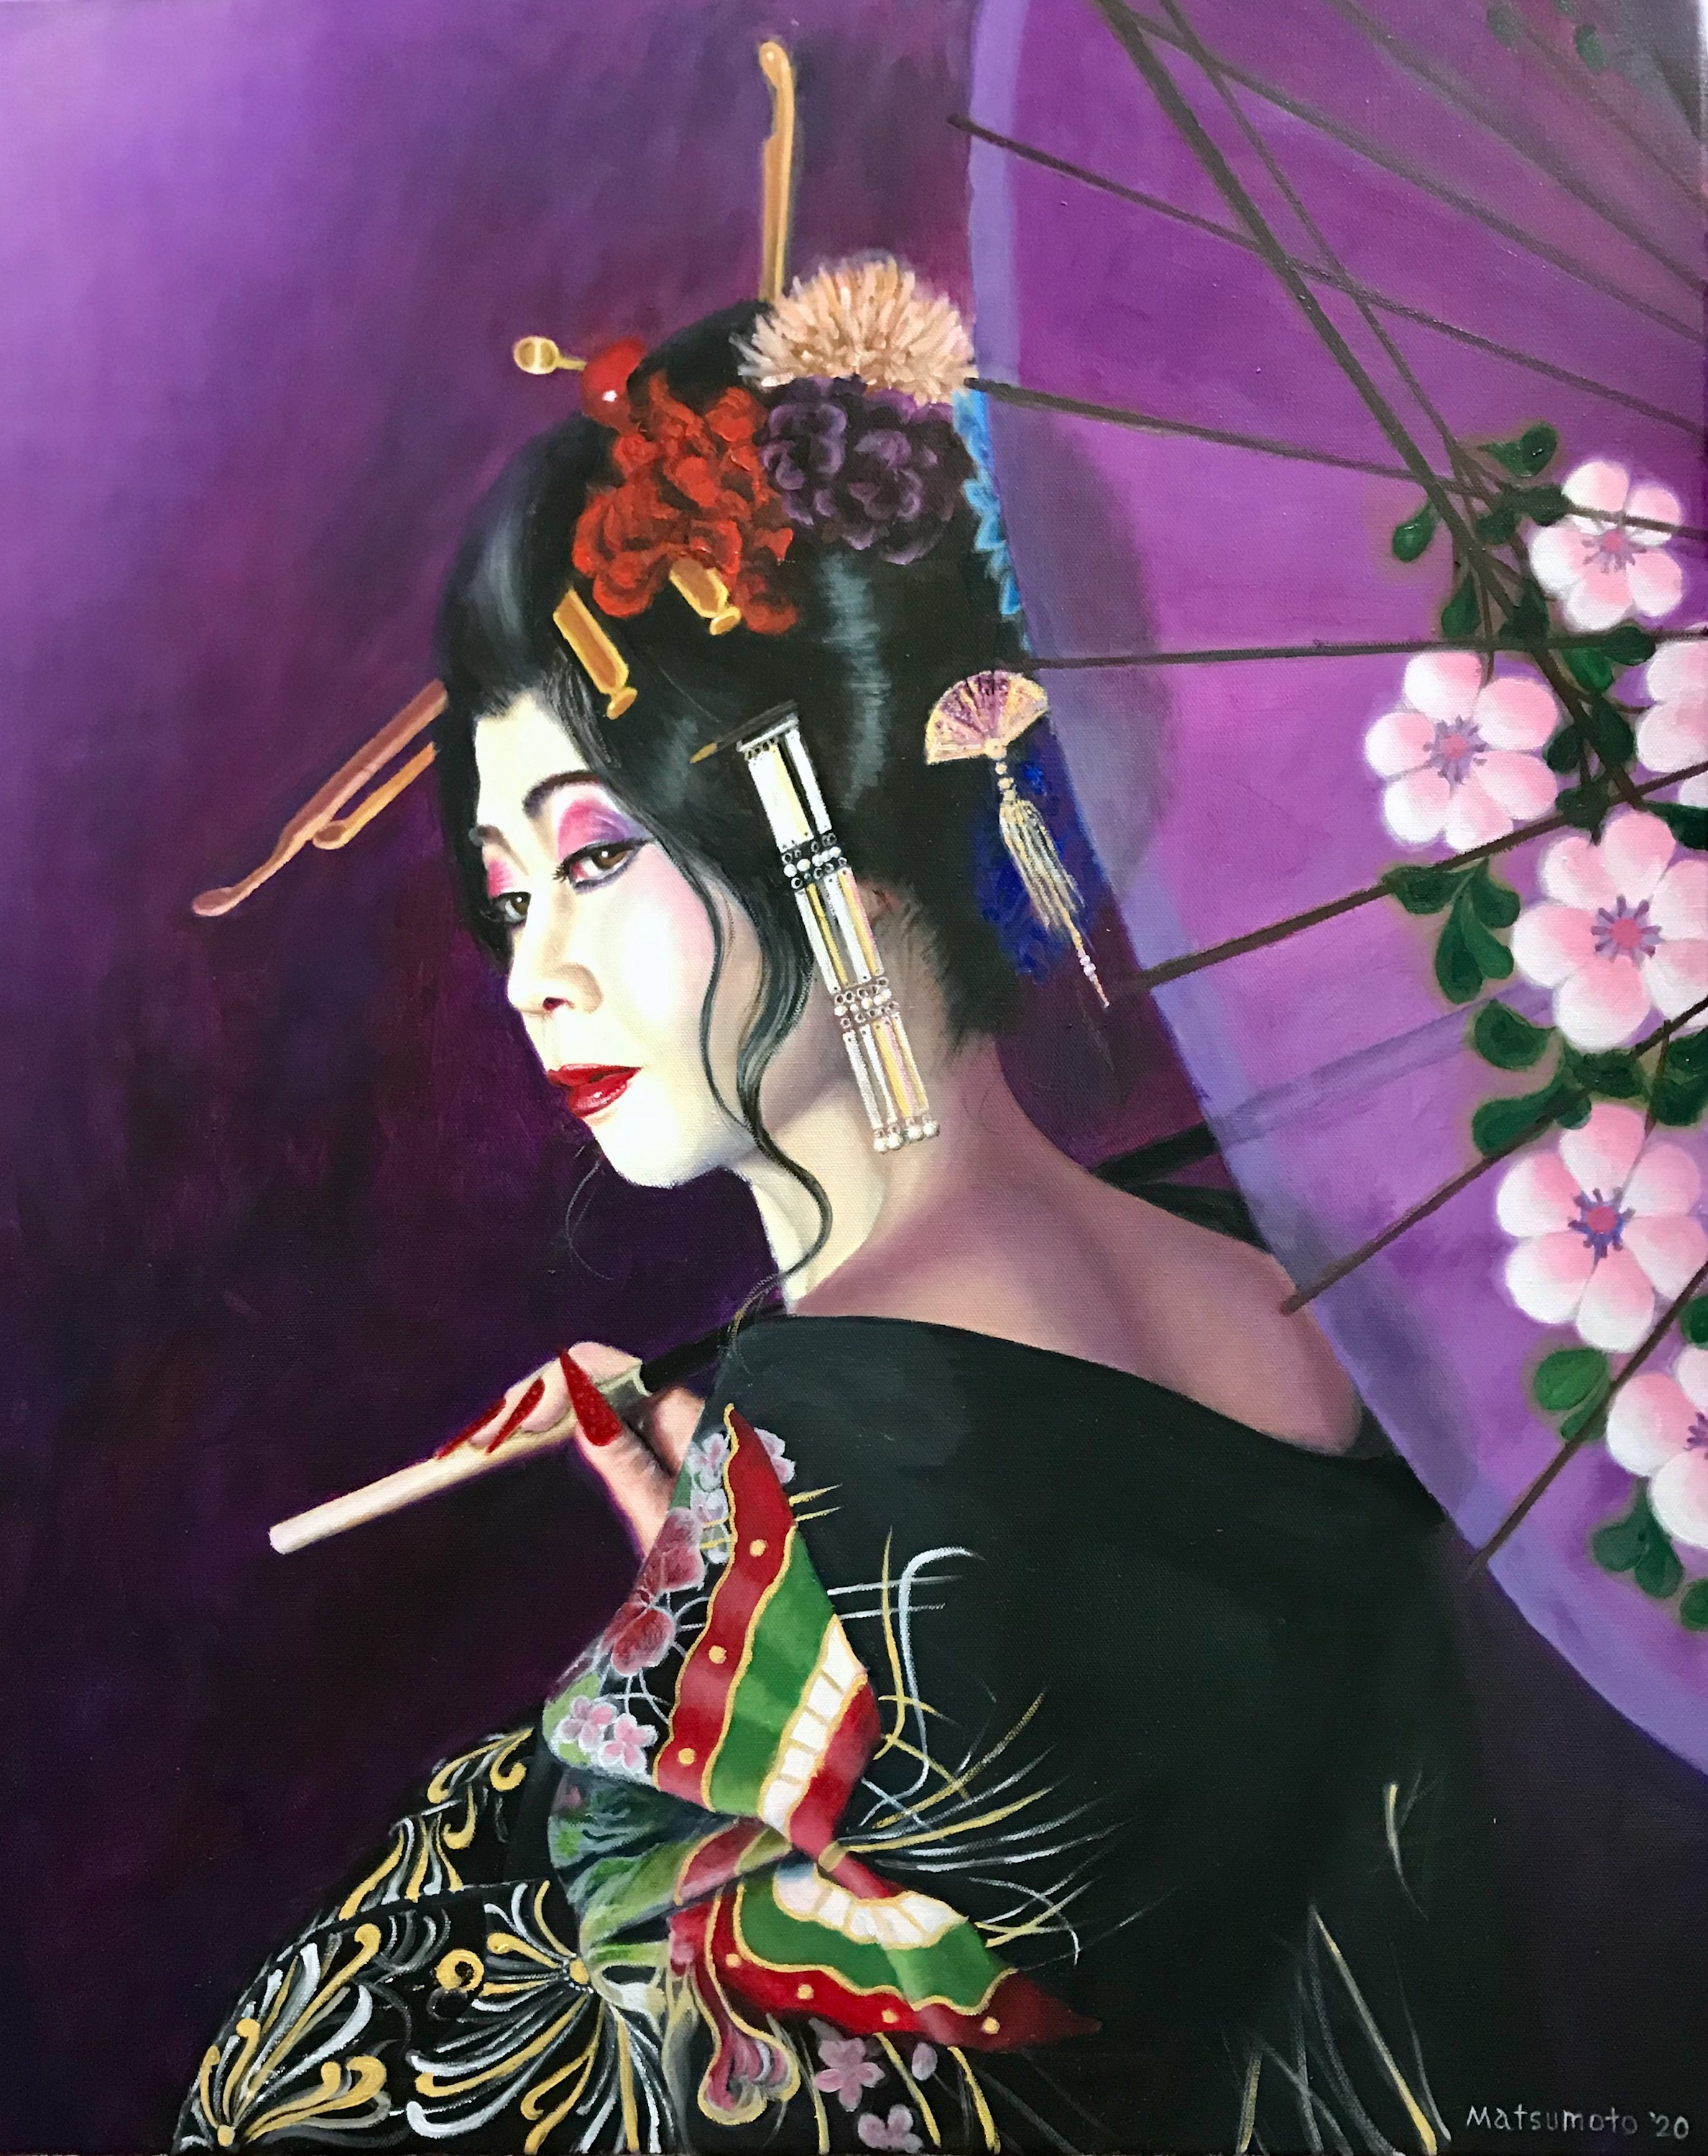 Edi matsumoto geisha glance kqhlrr